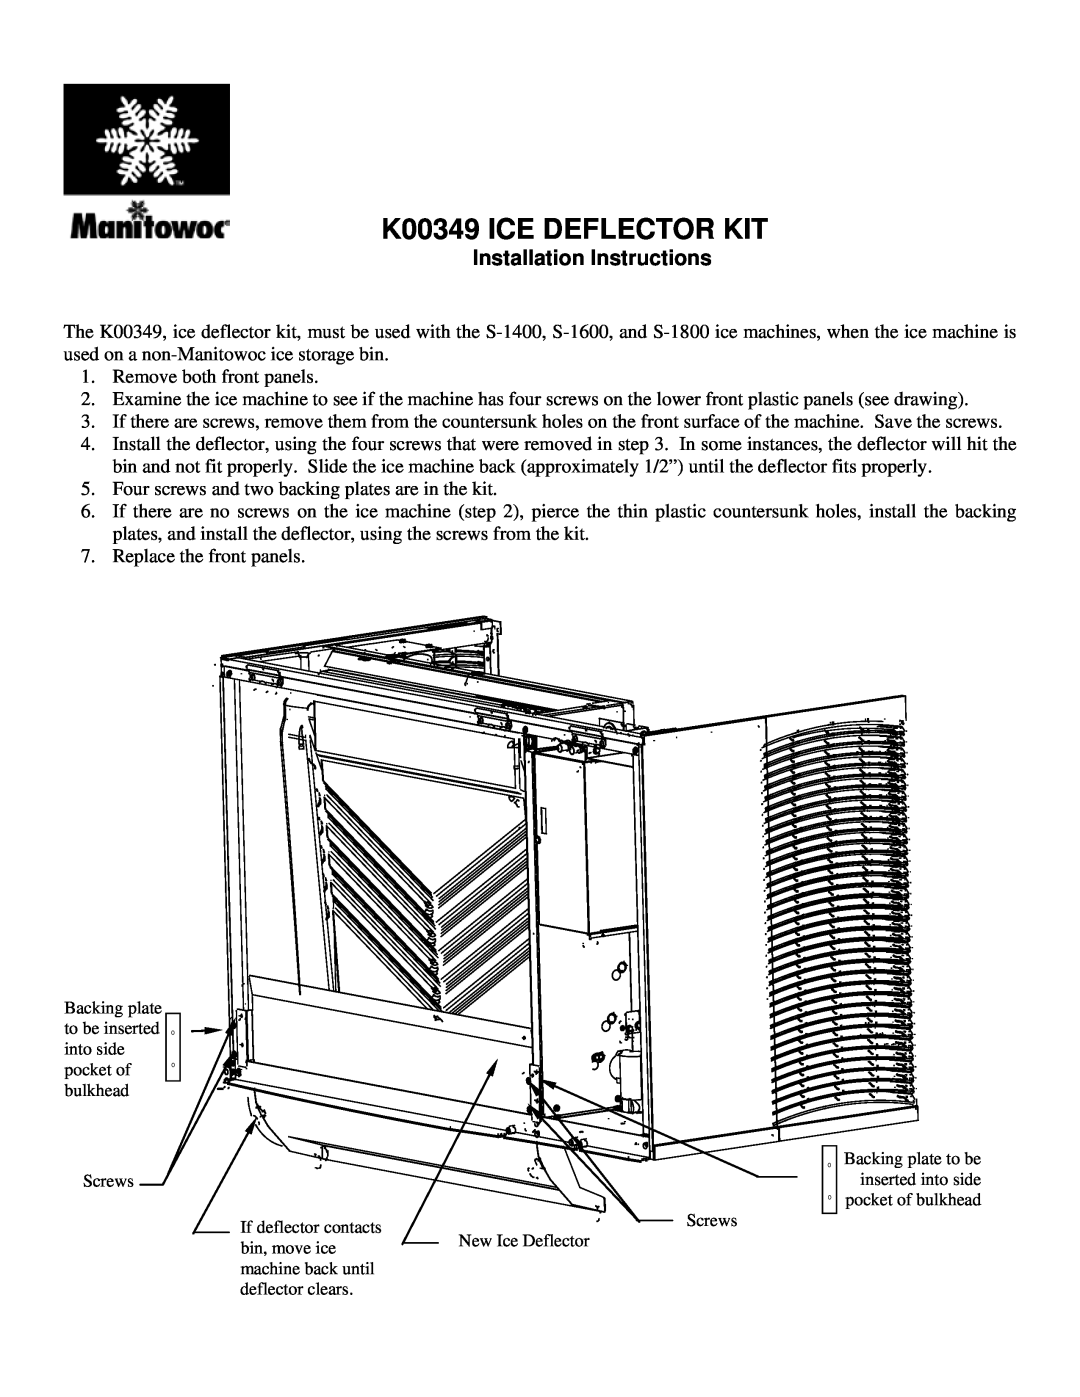 Manitowoc Ice installation instructions K00349 ICE DEFLECTOR KIT, Installation Instructions 